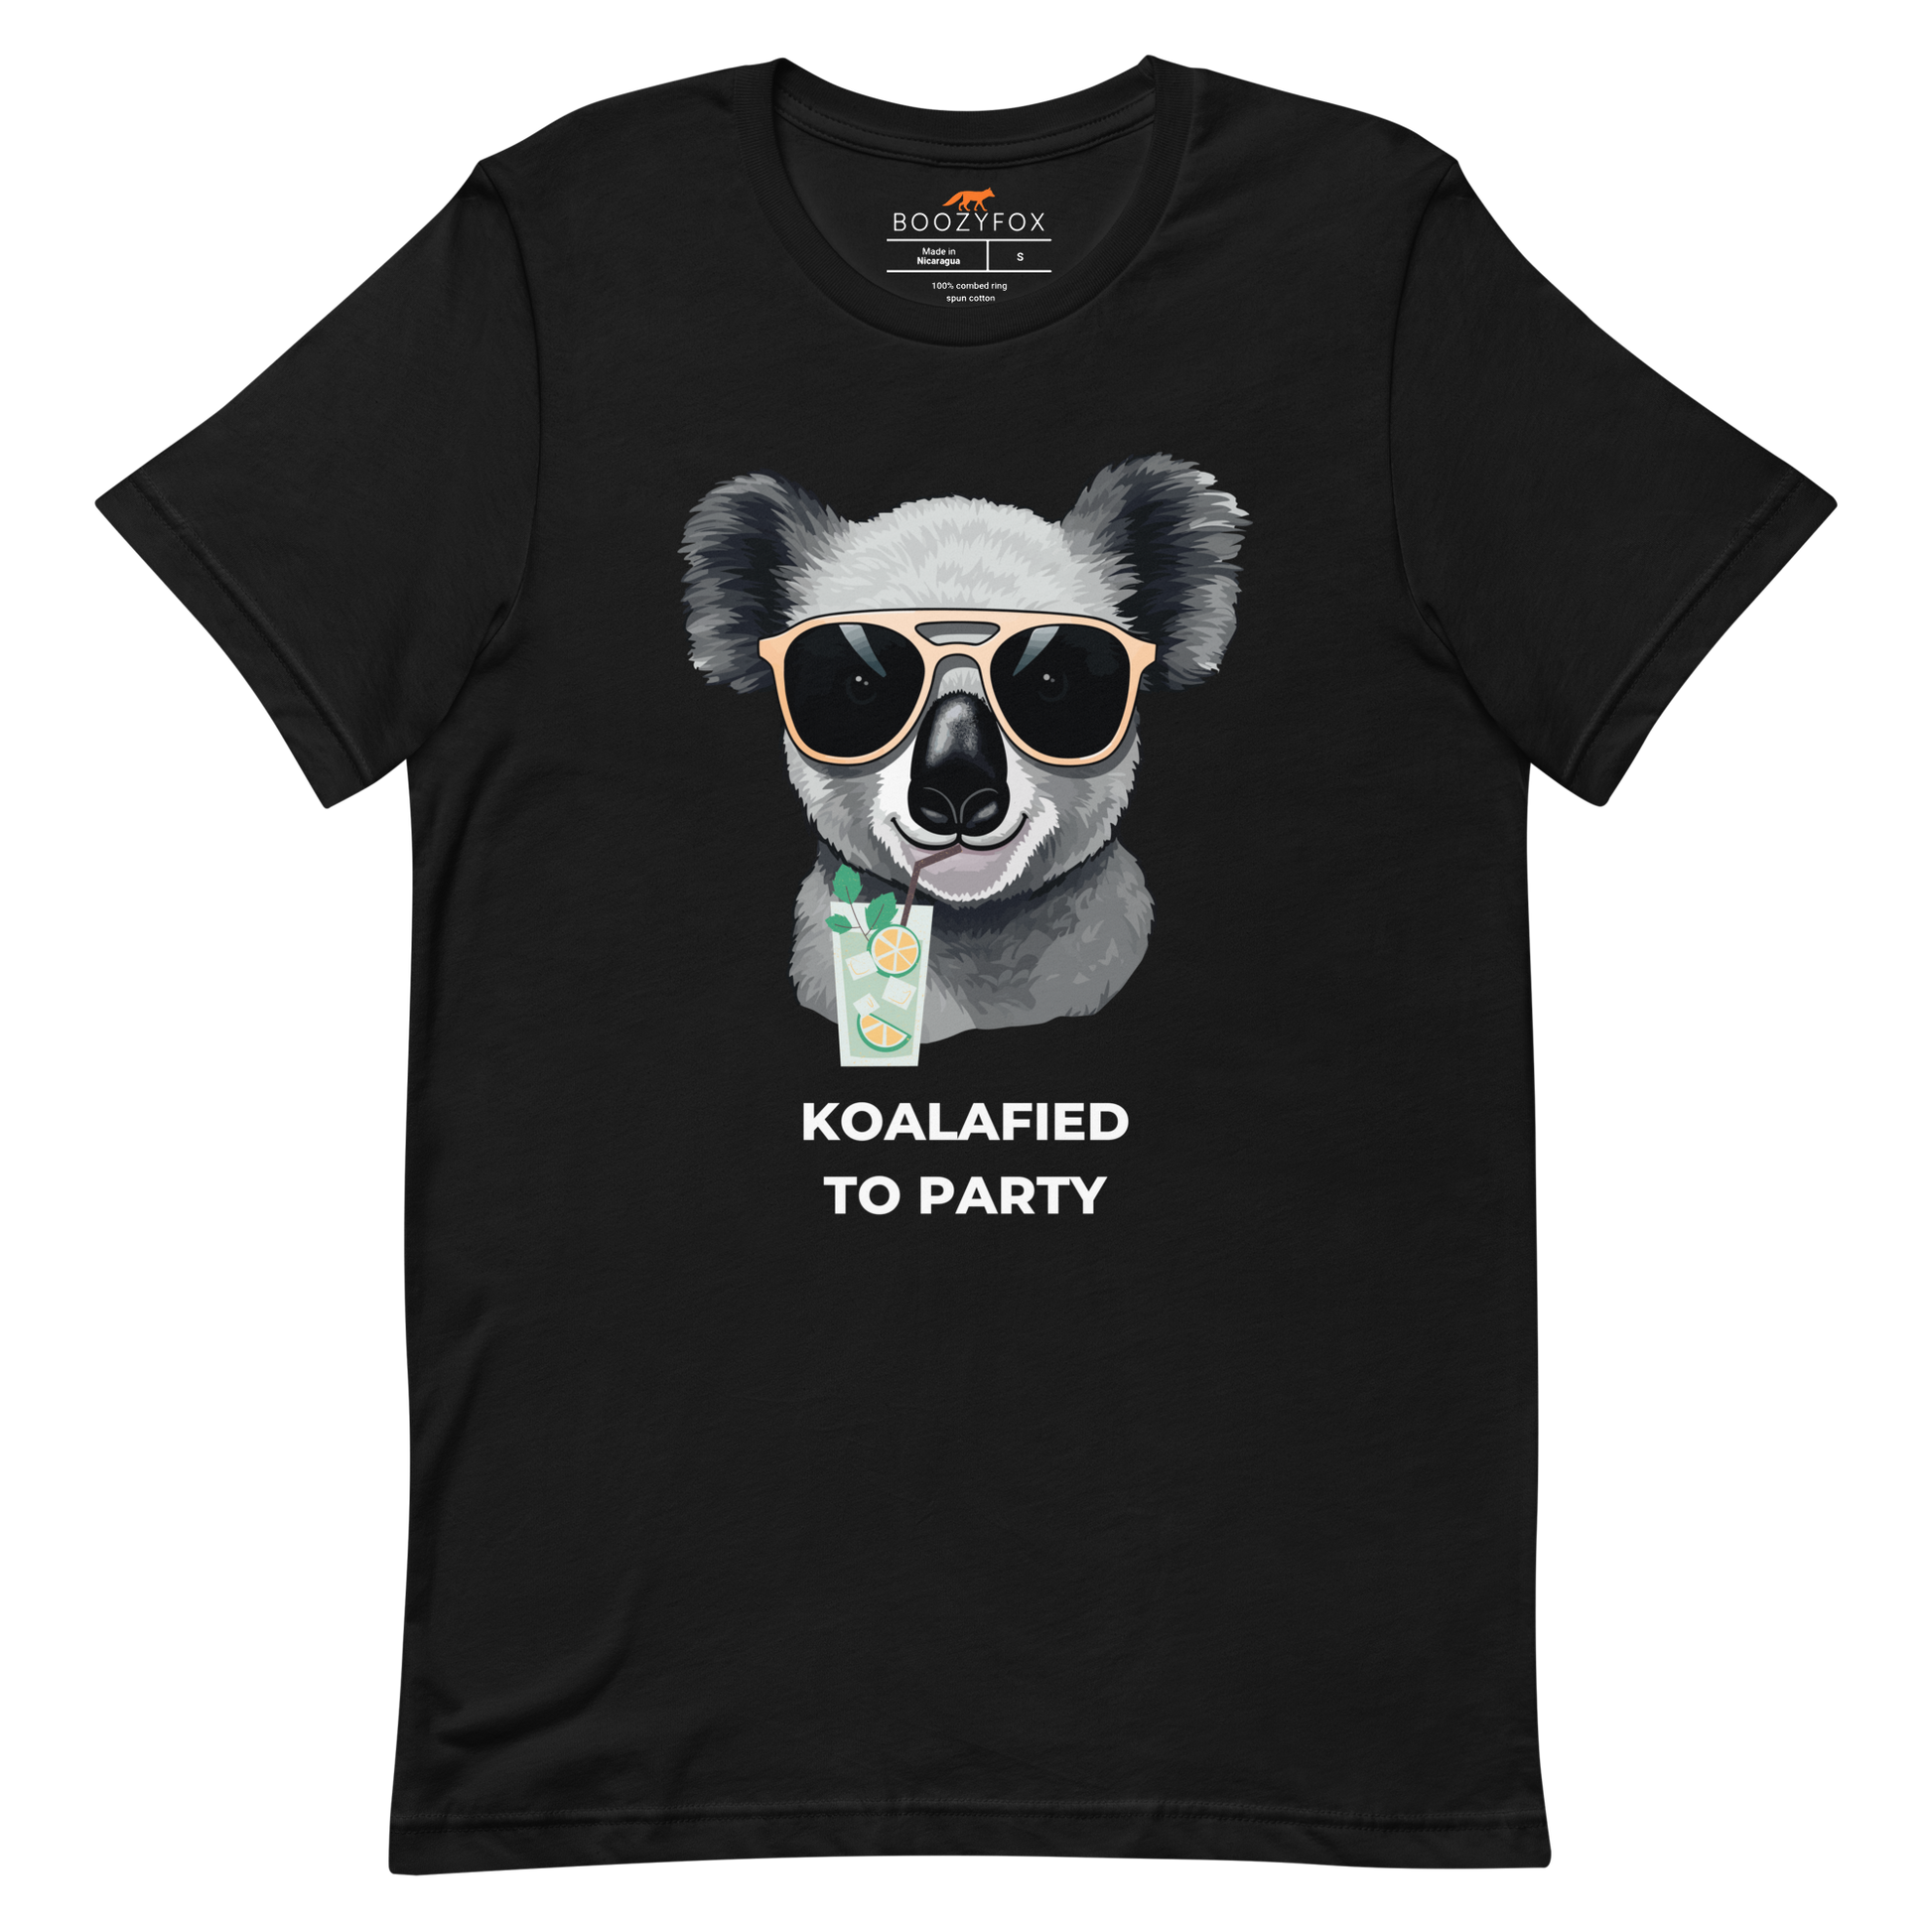 Black Premium Koala Tee featuring an adorable Koalafied To Party graphic on the chest - Funny Graphic Koala Tees - Boozy Fox